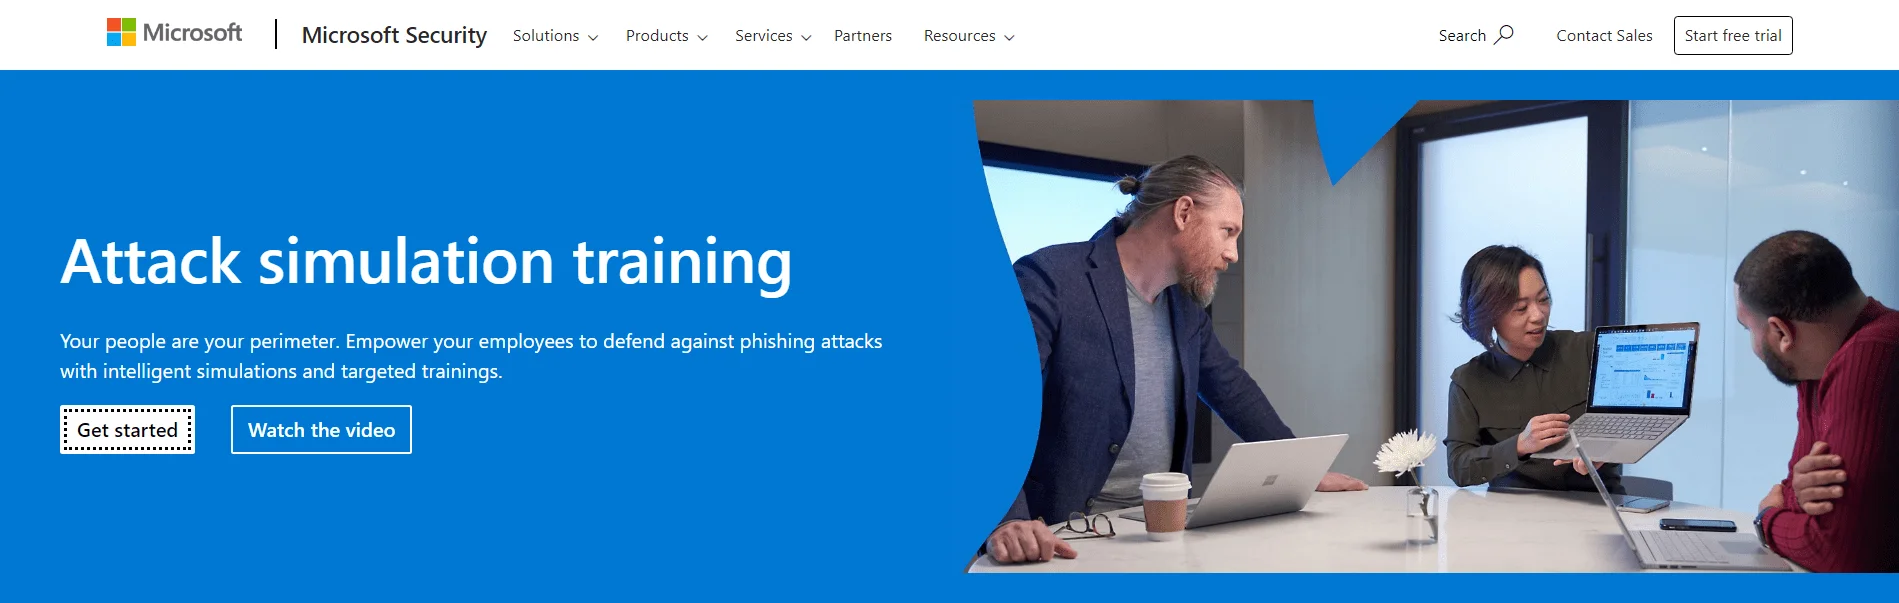 Microsoft’s Attack Simulation Training start page